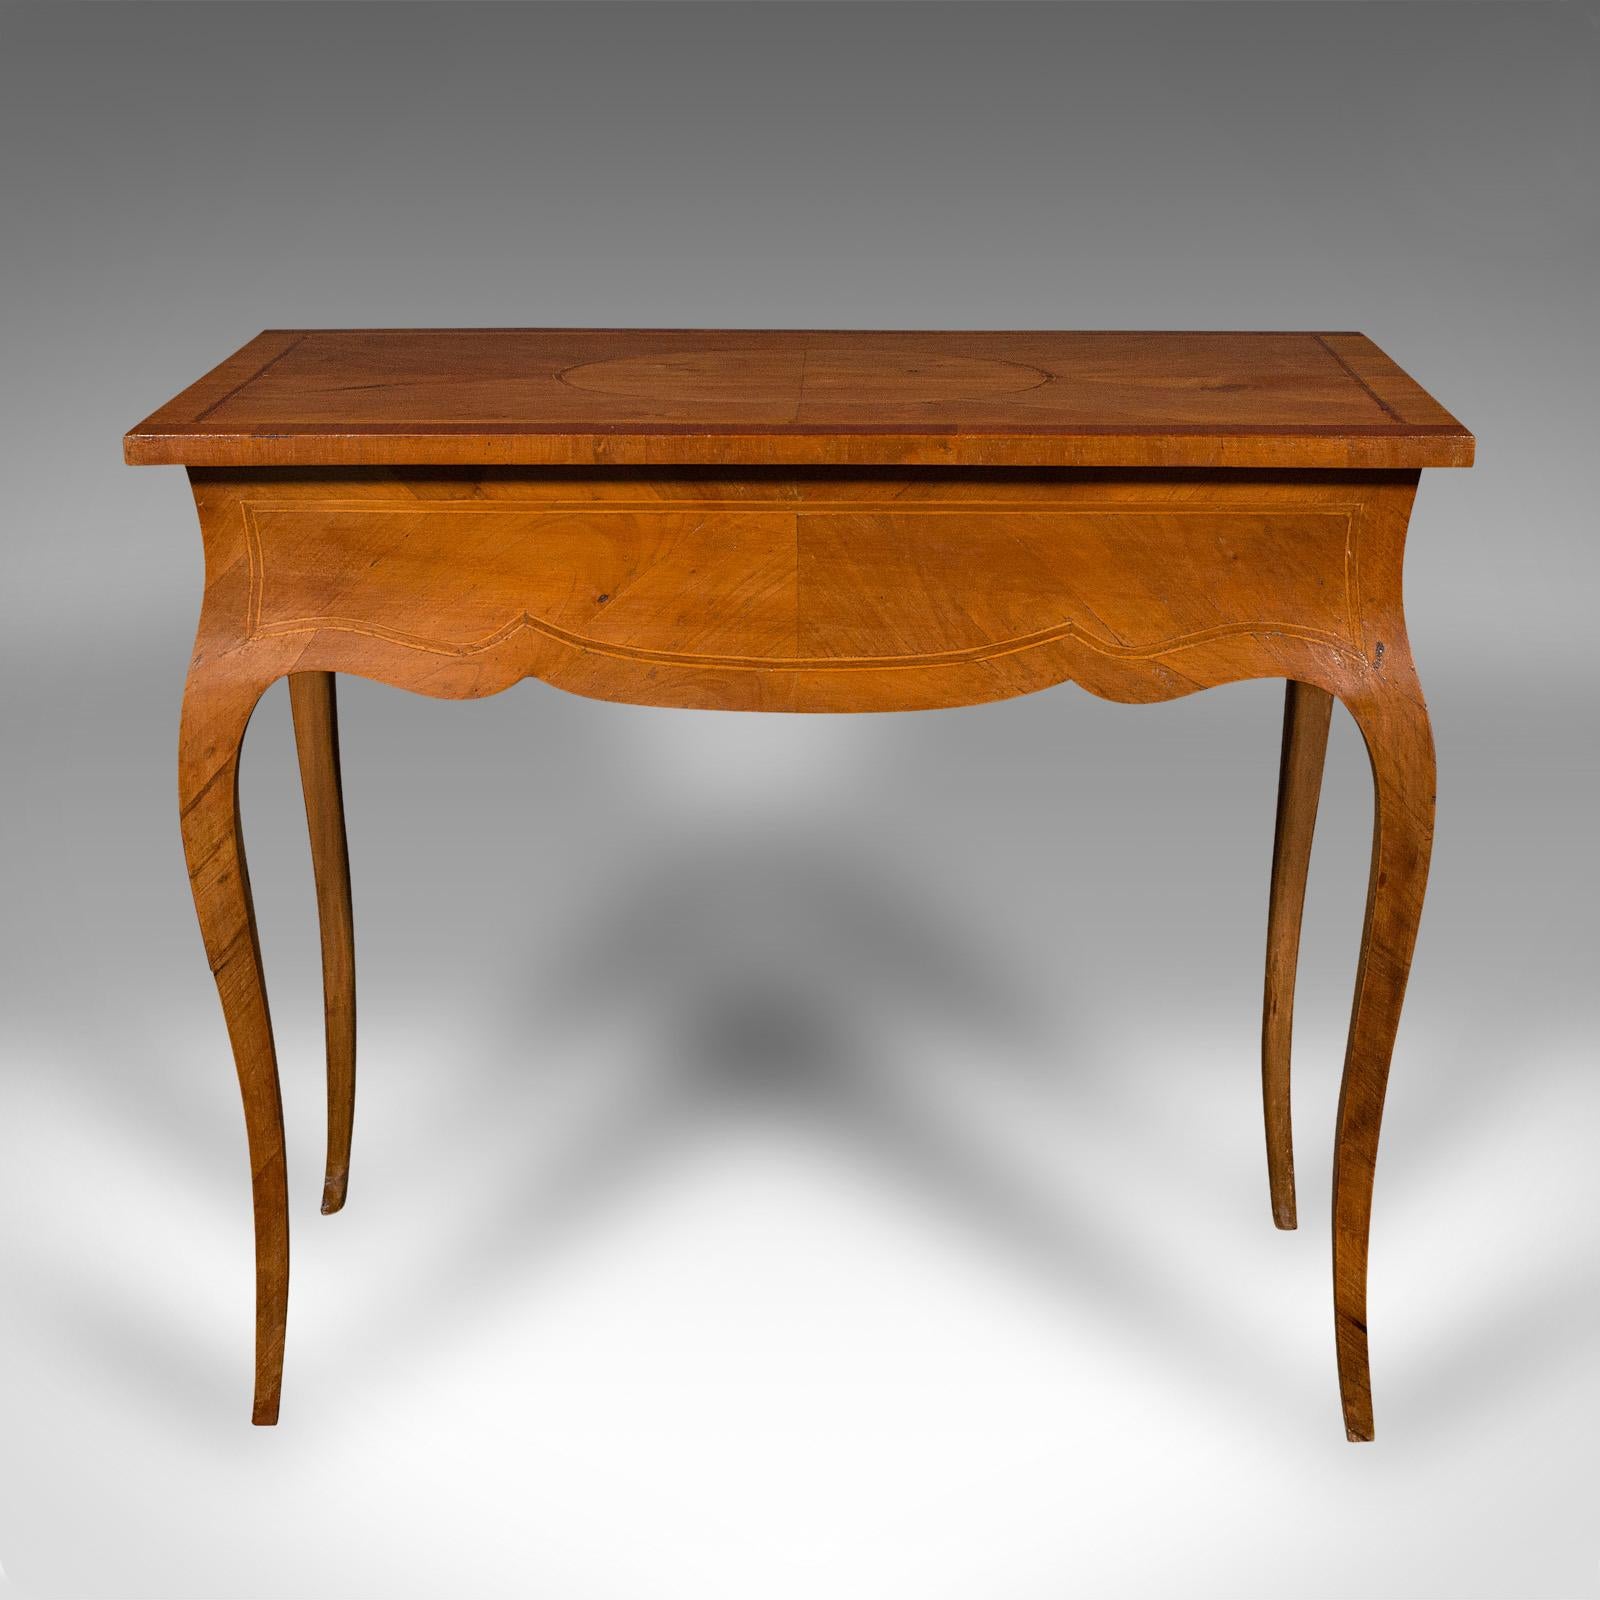 Boxwood Antique Bureau Plat, French, Walnut, Writing Desk, Louis XV Revival, Victorian For Sale